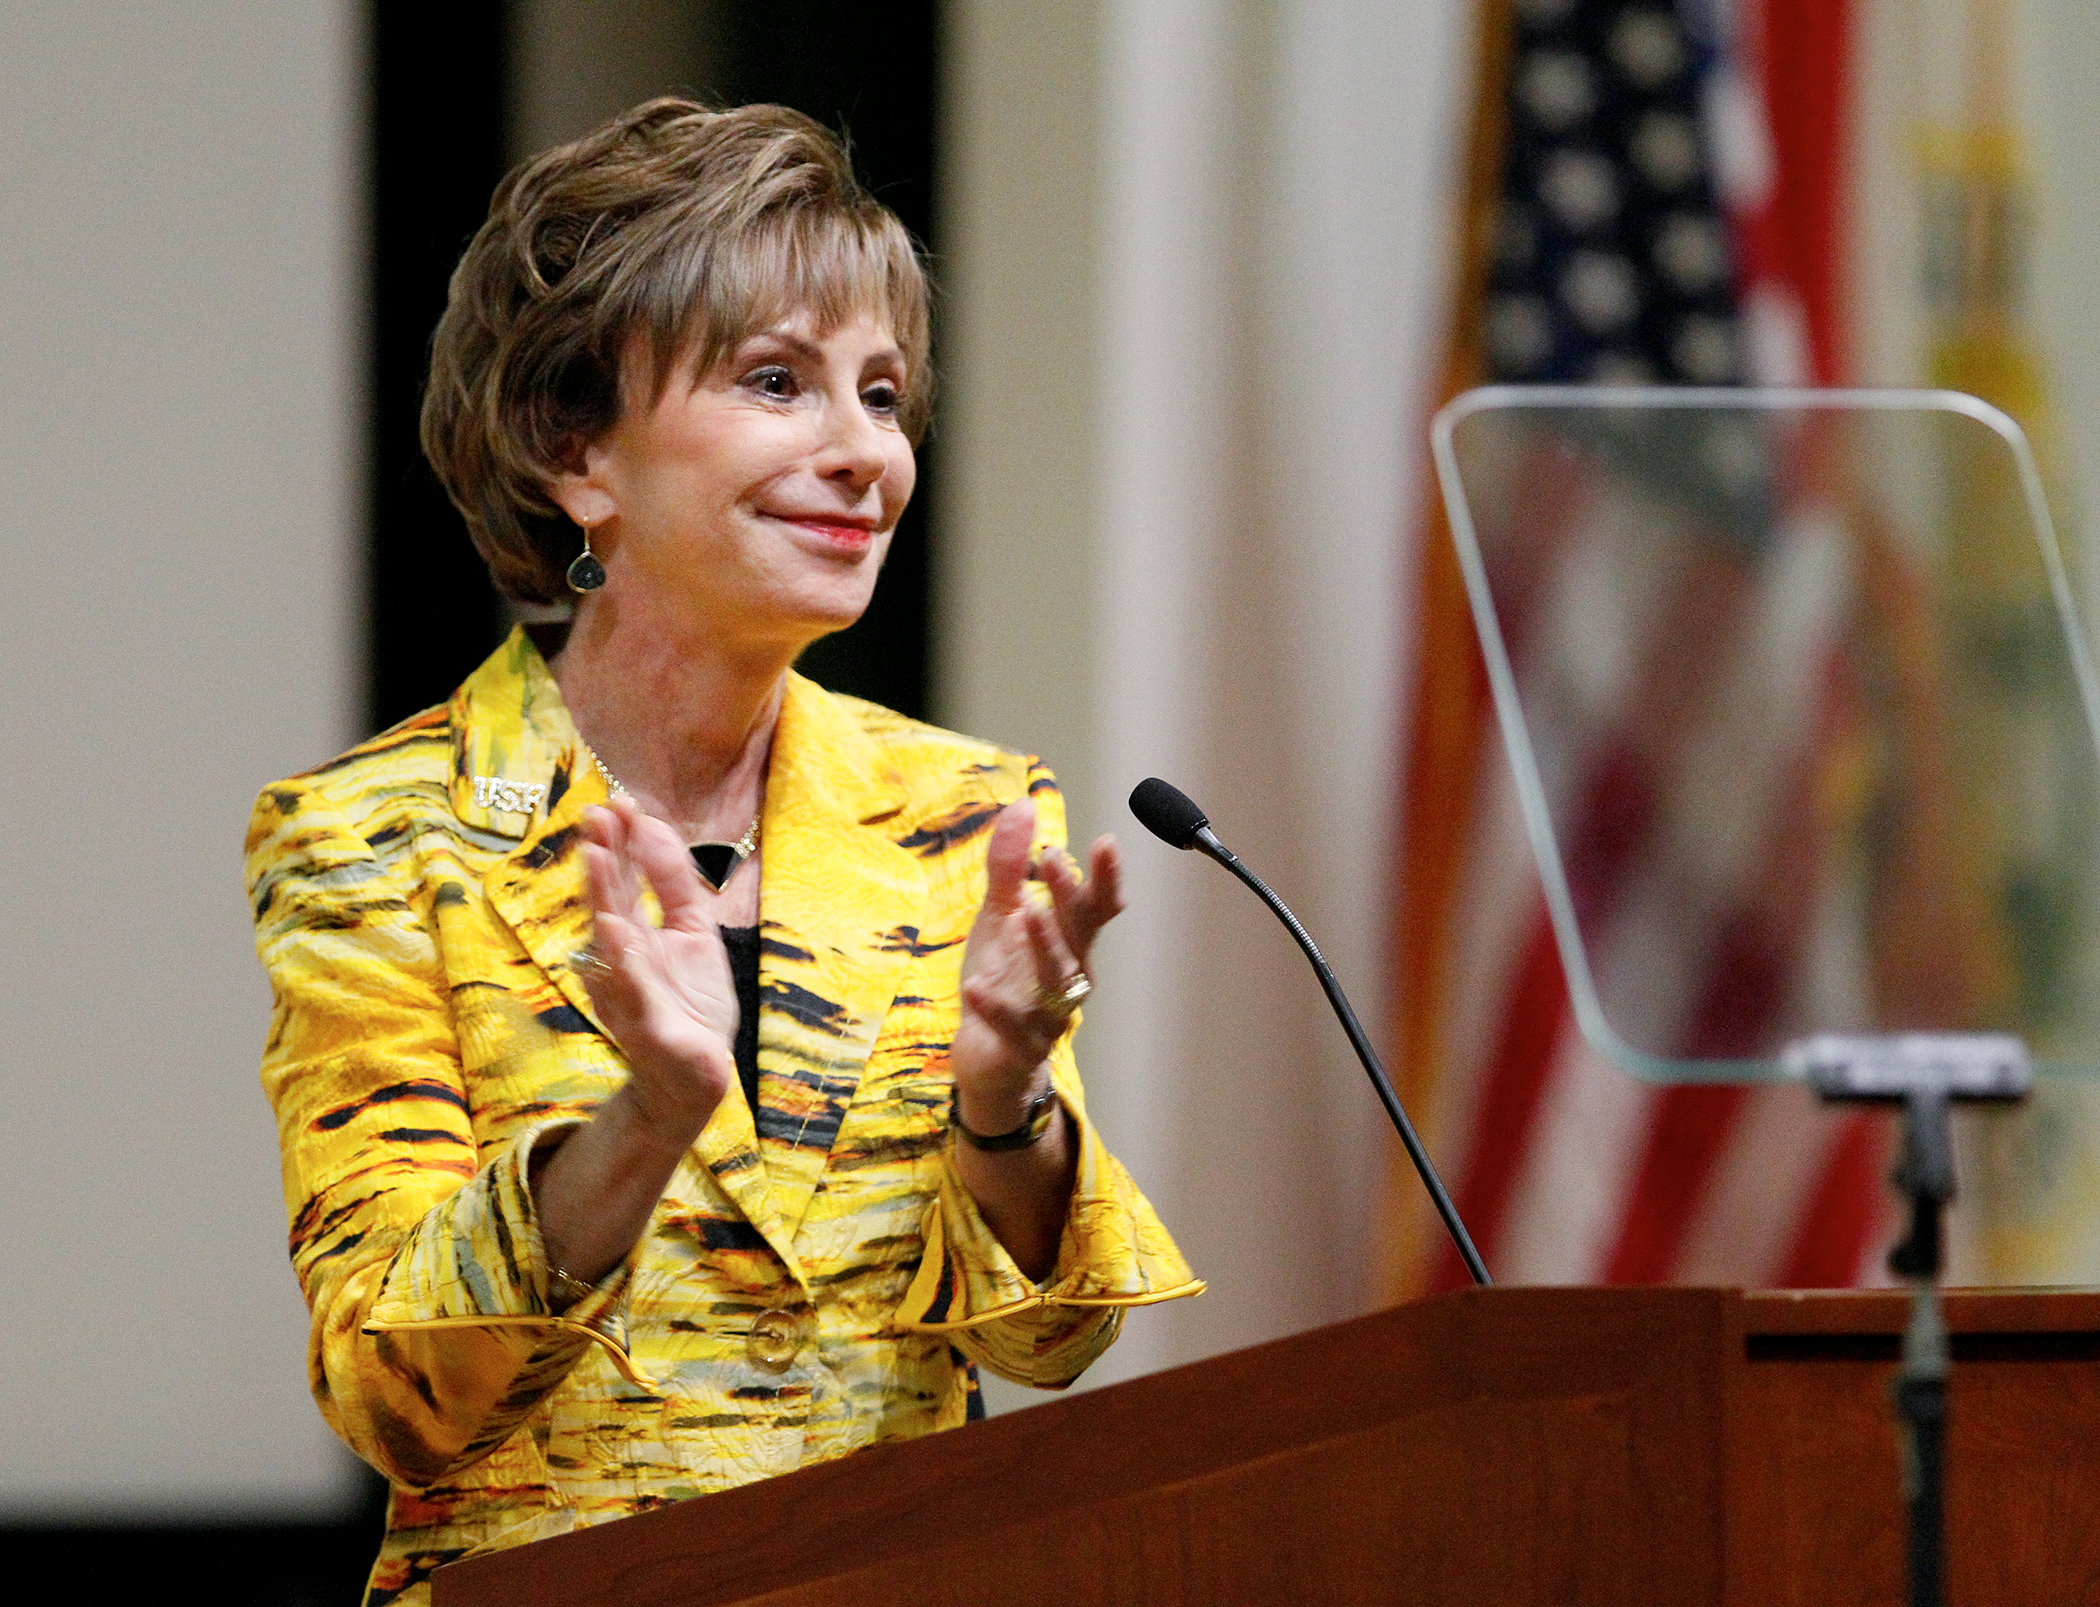 University of South Florida president Judy Genshaft